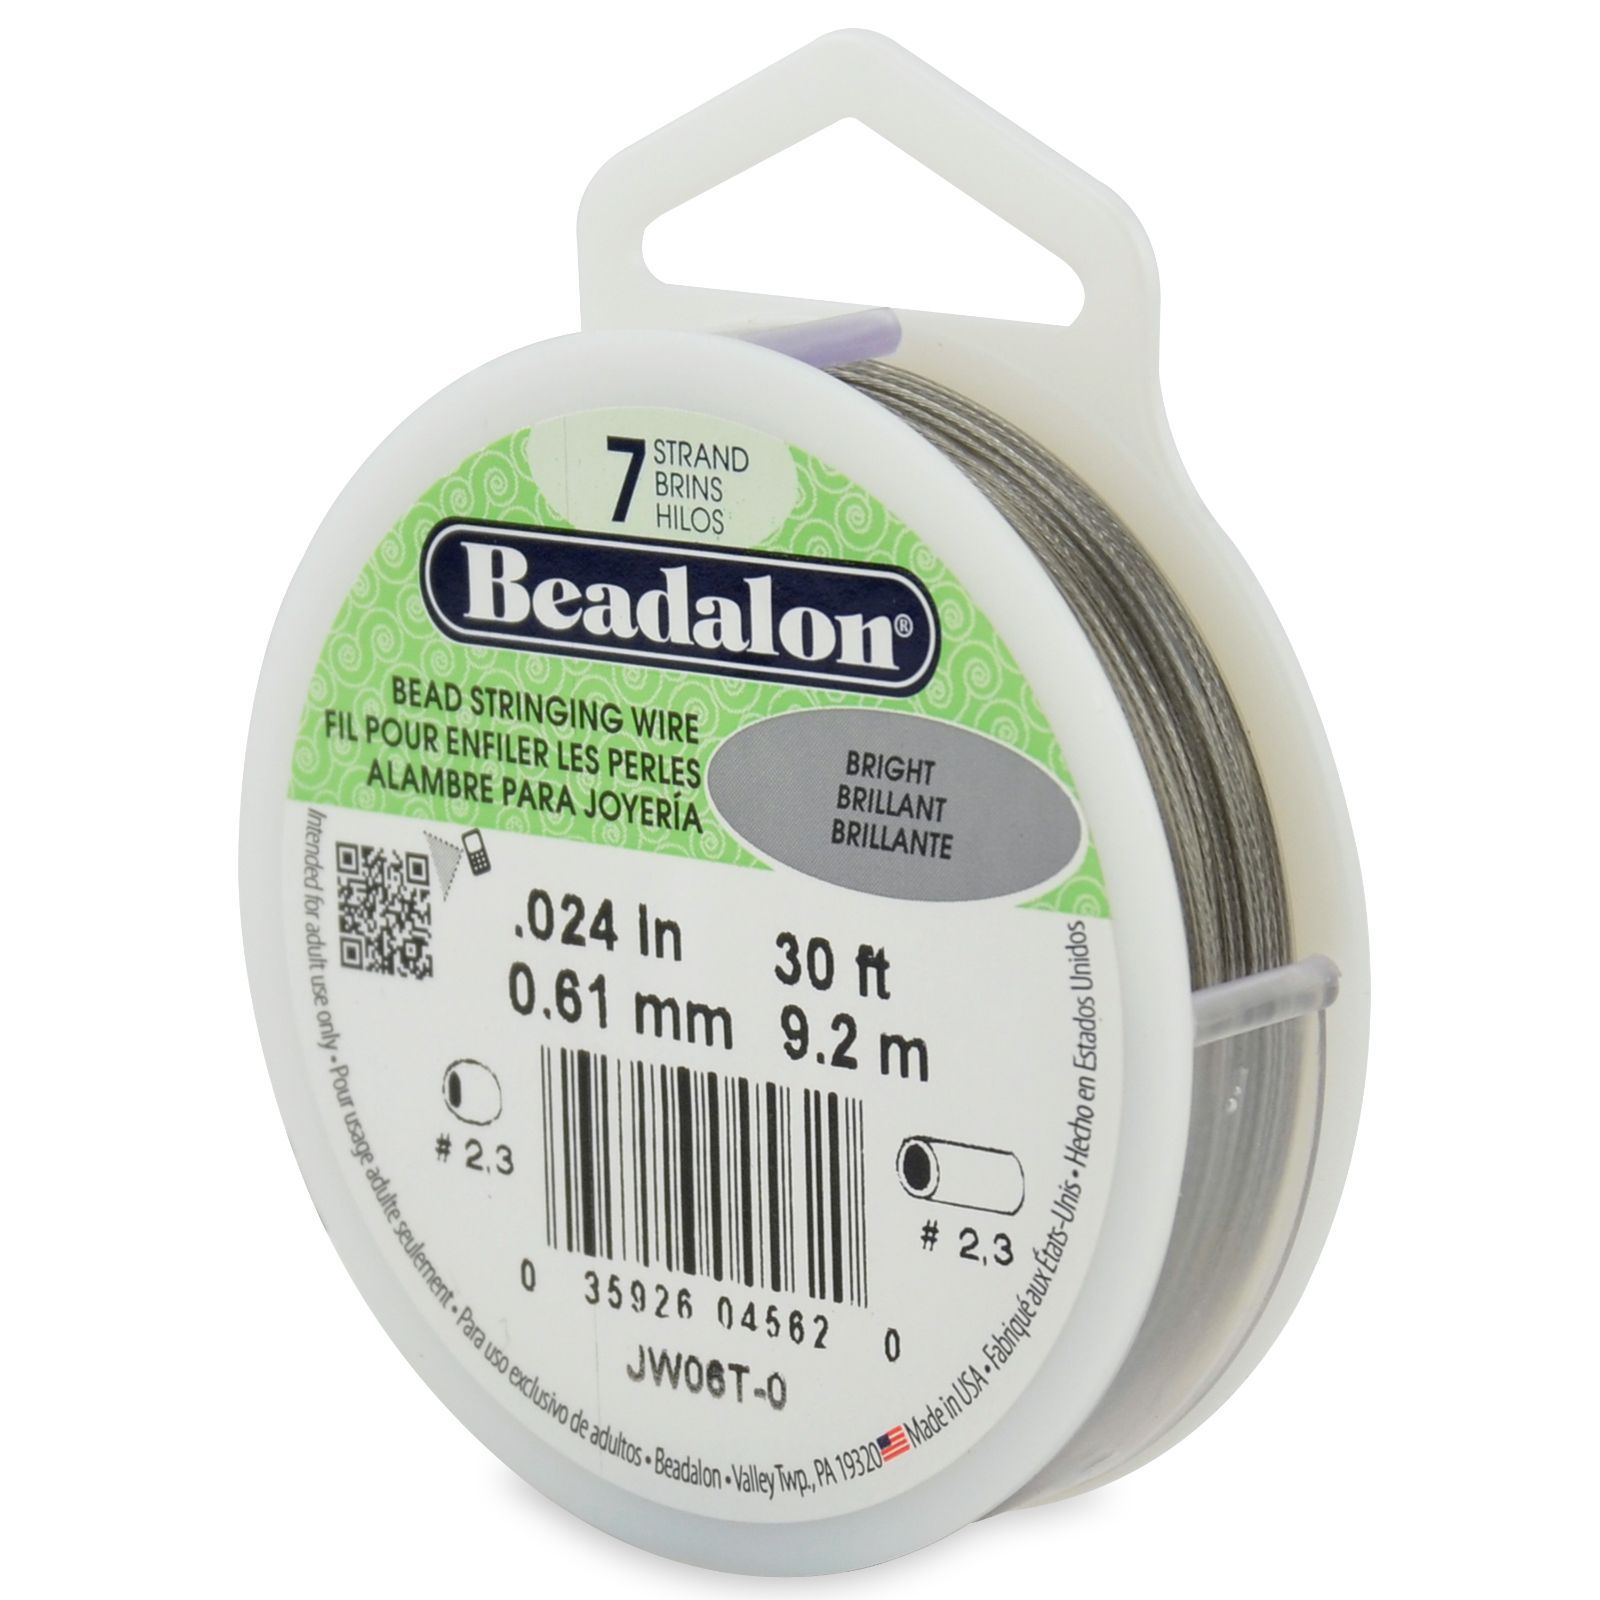 Beadalon Beading Wire - The Bead Shop